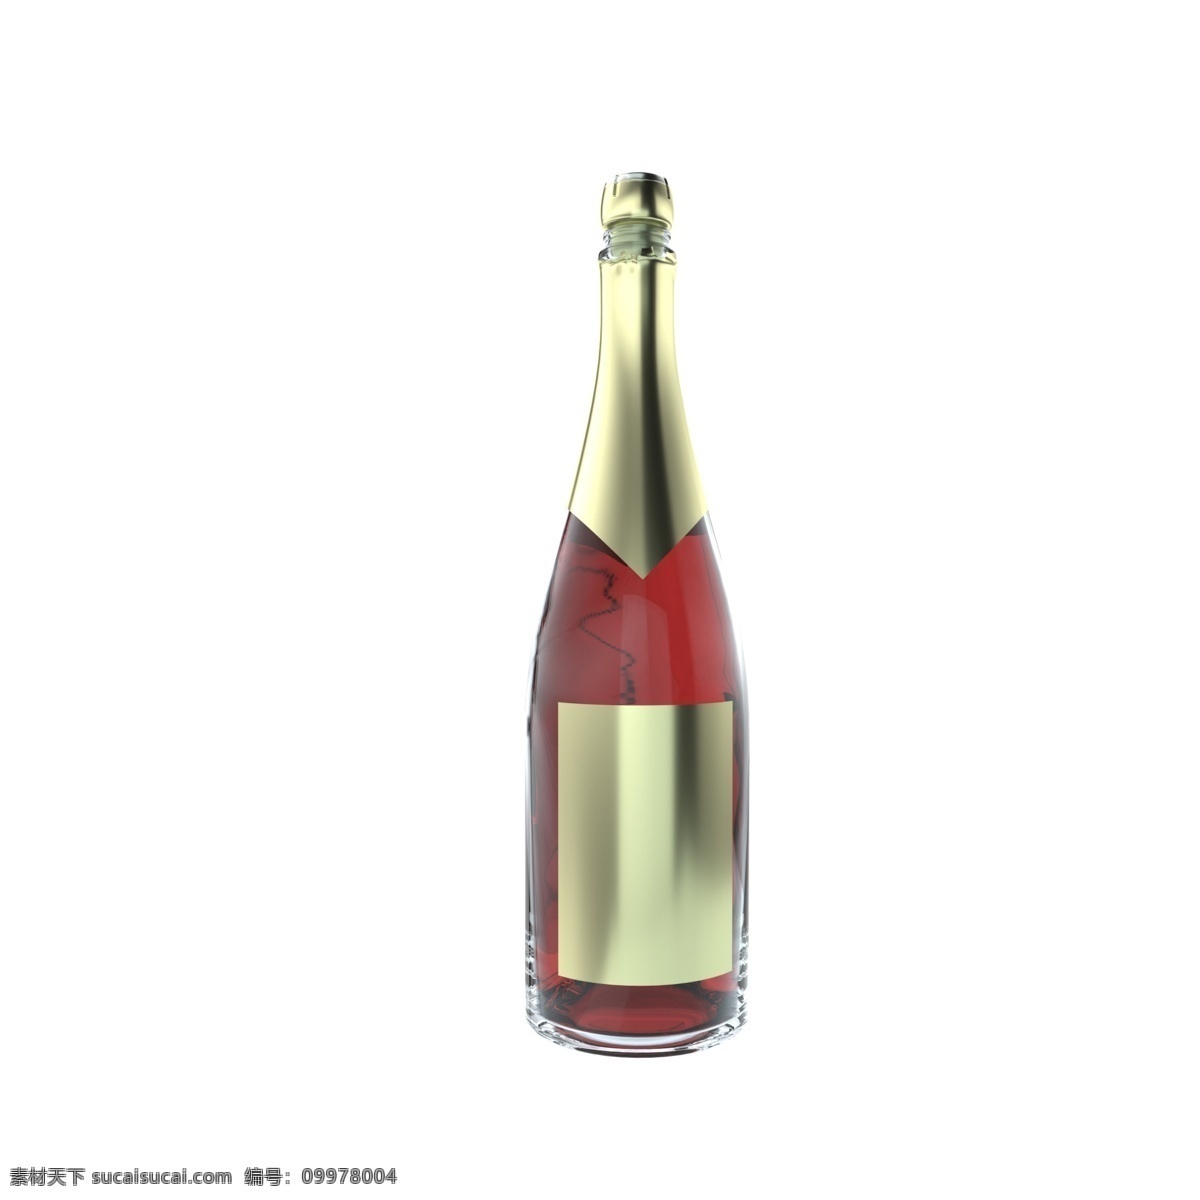 3d 立体 金色 玻璃 瓶子 c4d 写实仿真 酒瓶 玻璃瓶子 玻璃器皿 红酒 洋酒 透明玻璃 红色 香槟